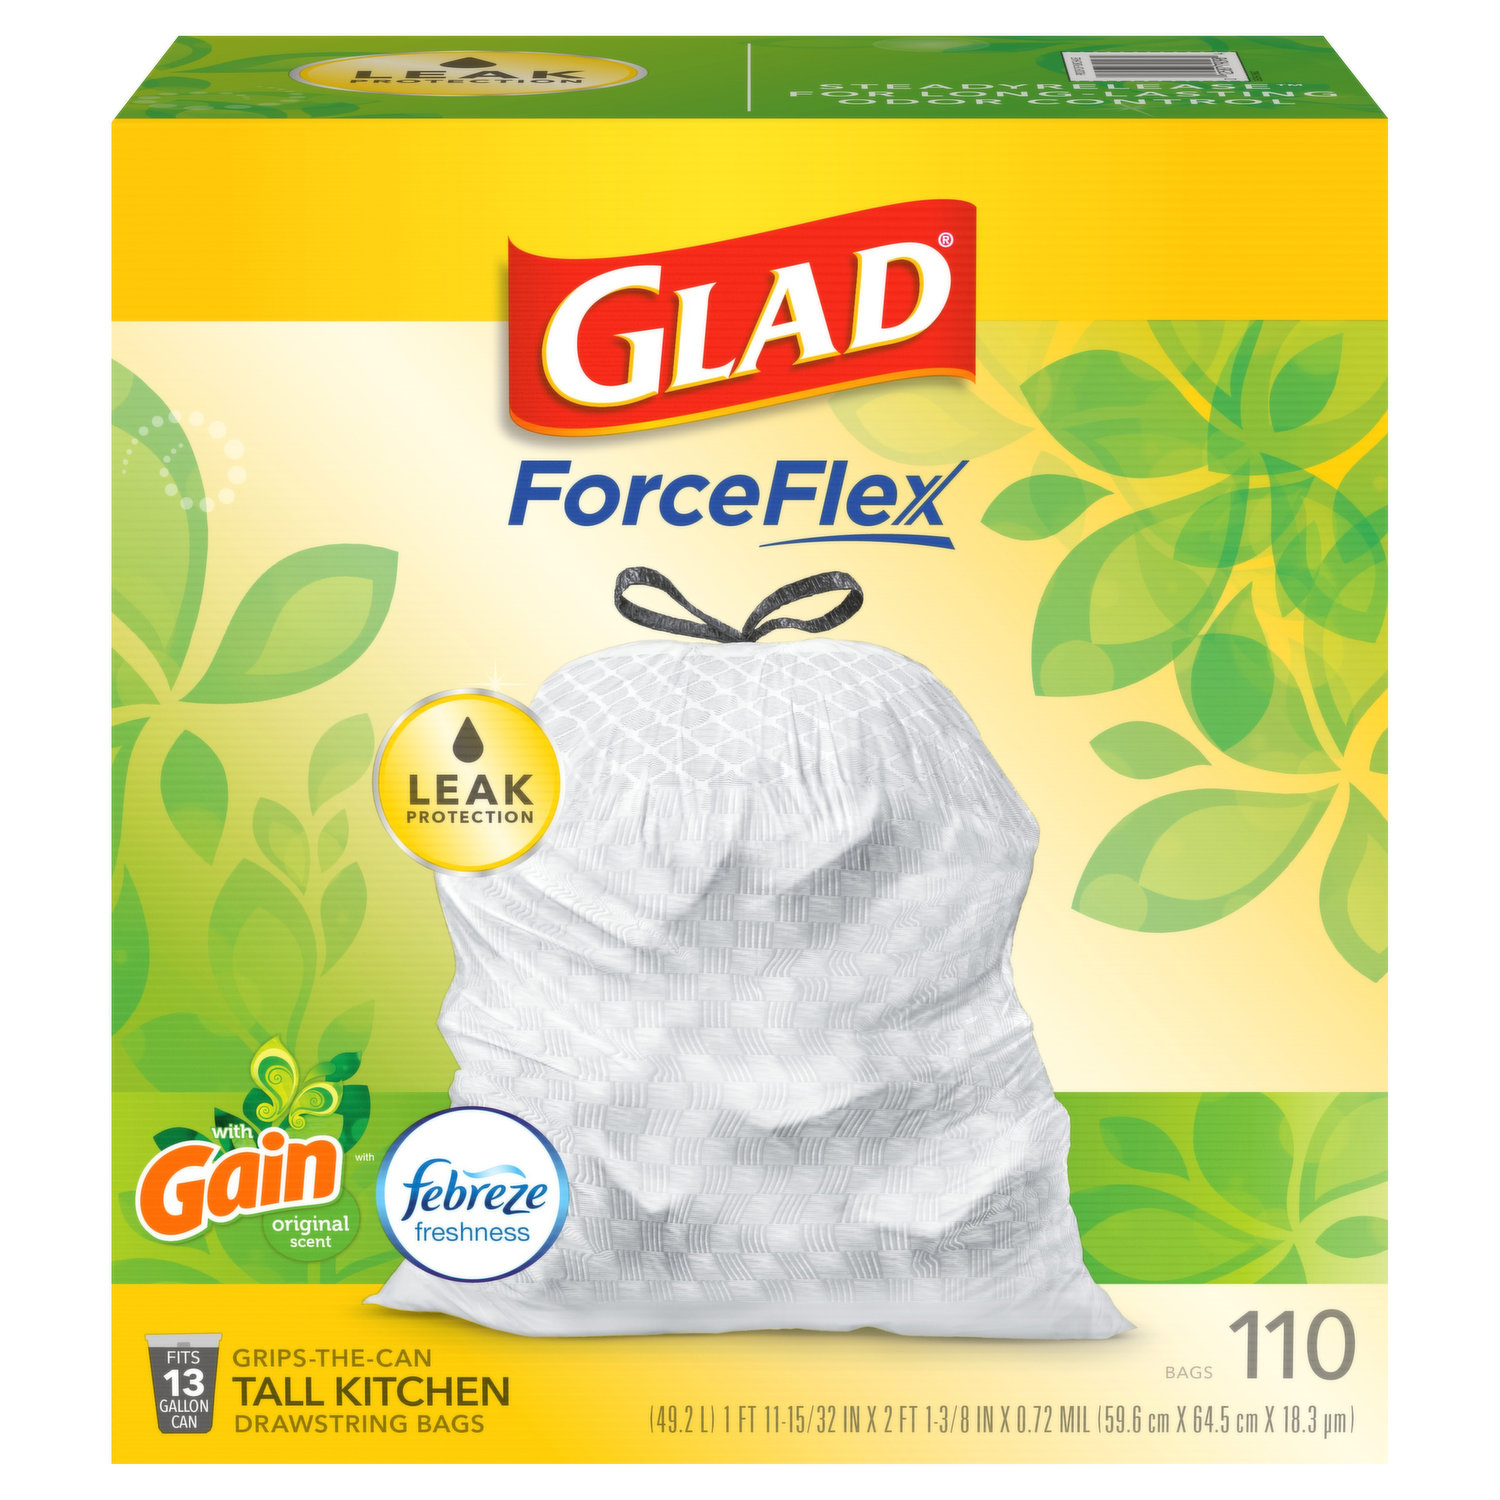 Glad ForceFlex Plus Kitchen Bags, Tall, Drawstring, Gain Original Scent, 13 Gallon - 34 bags